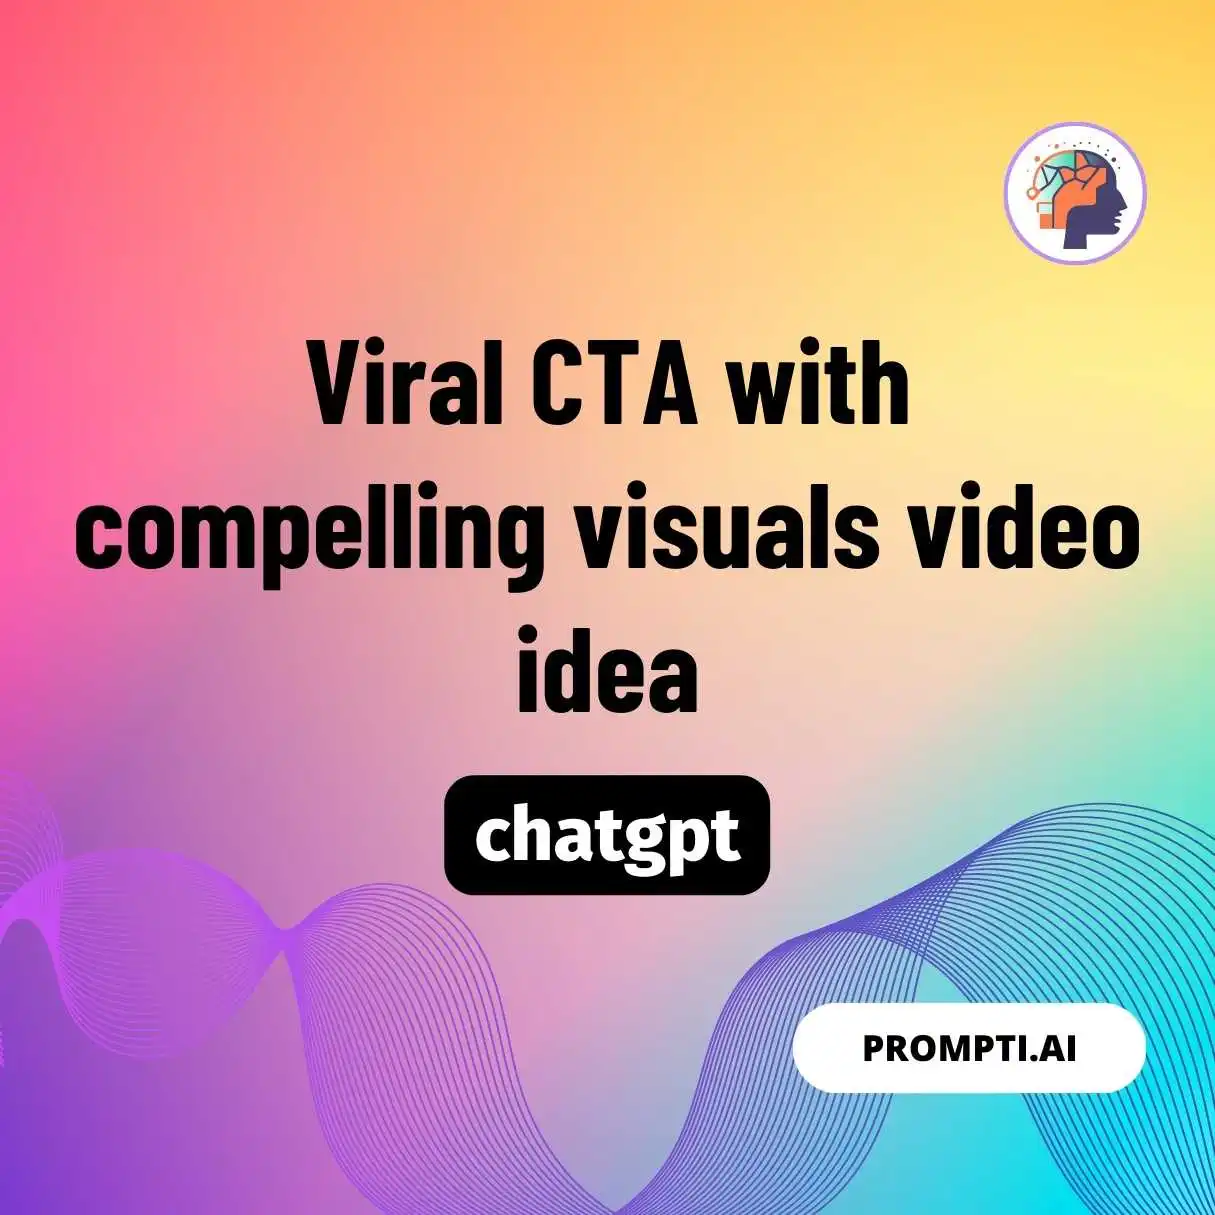 Viral CTA with compelling visuals video idea